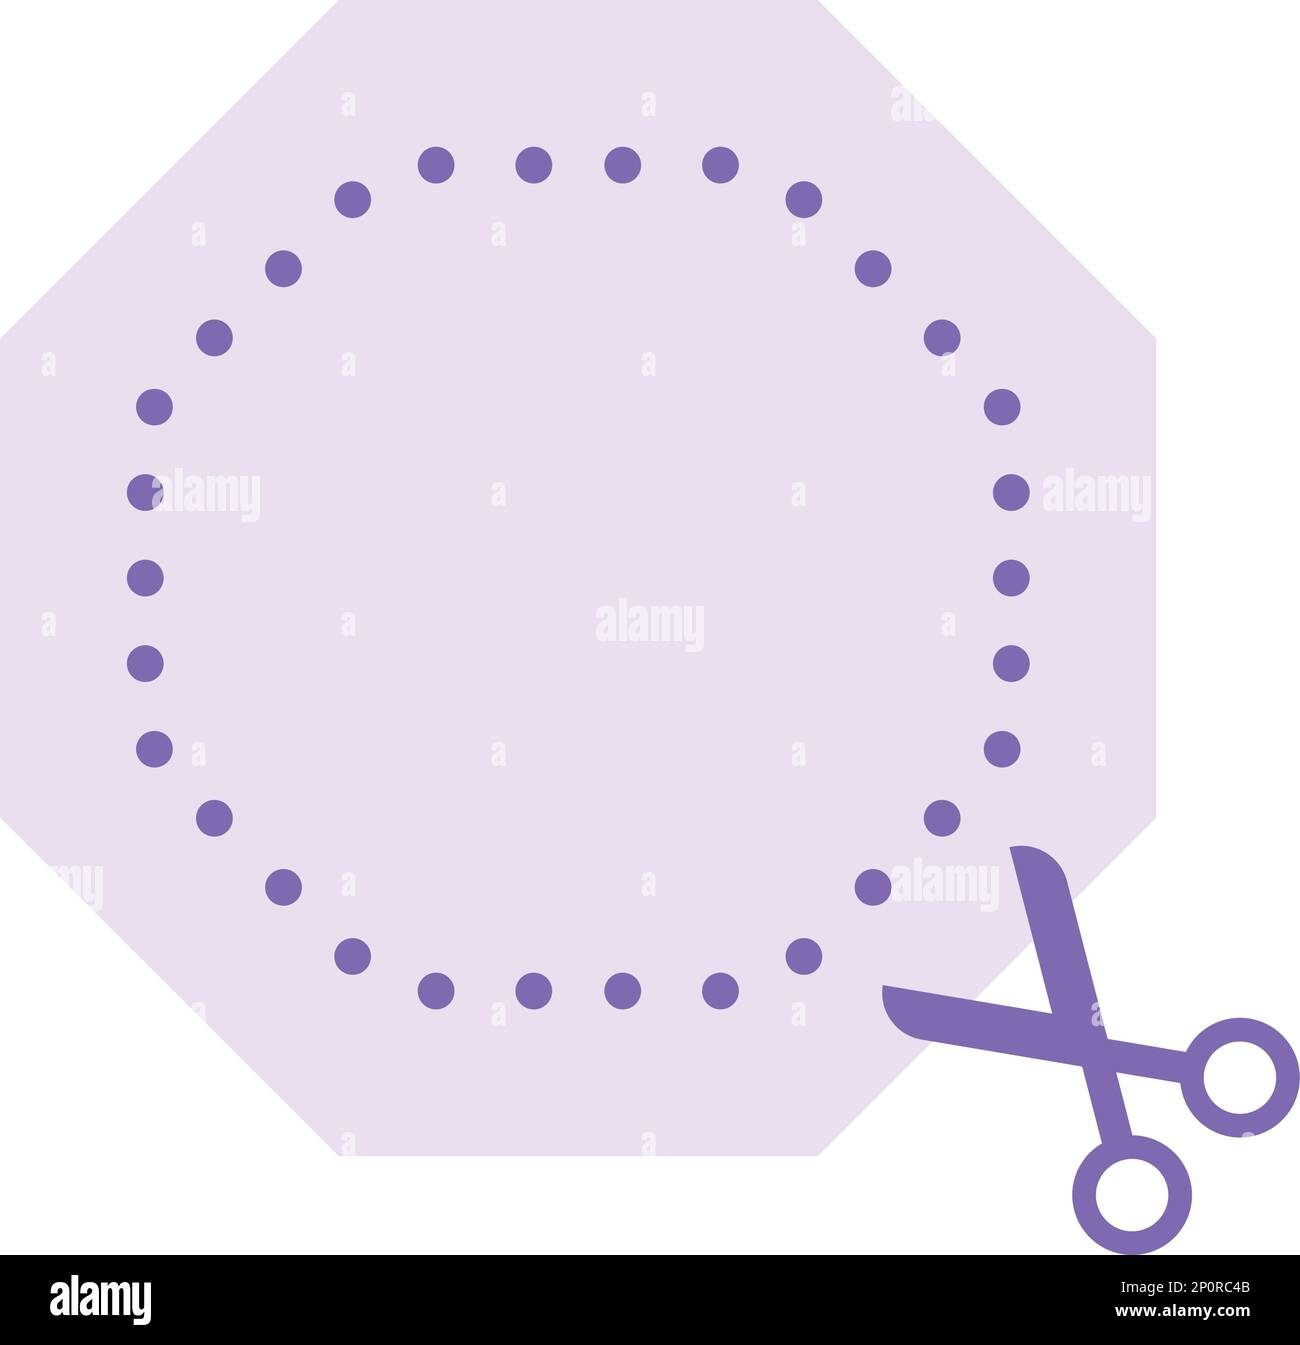 Cutting practice activites octagon shape symbol element for preschool scissors activity for motor skills development for kids Stock Vector